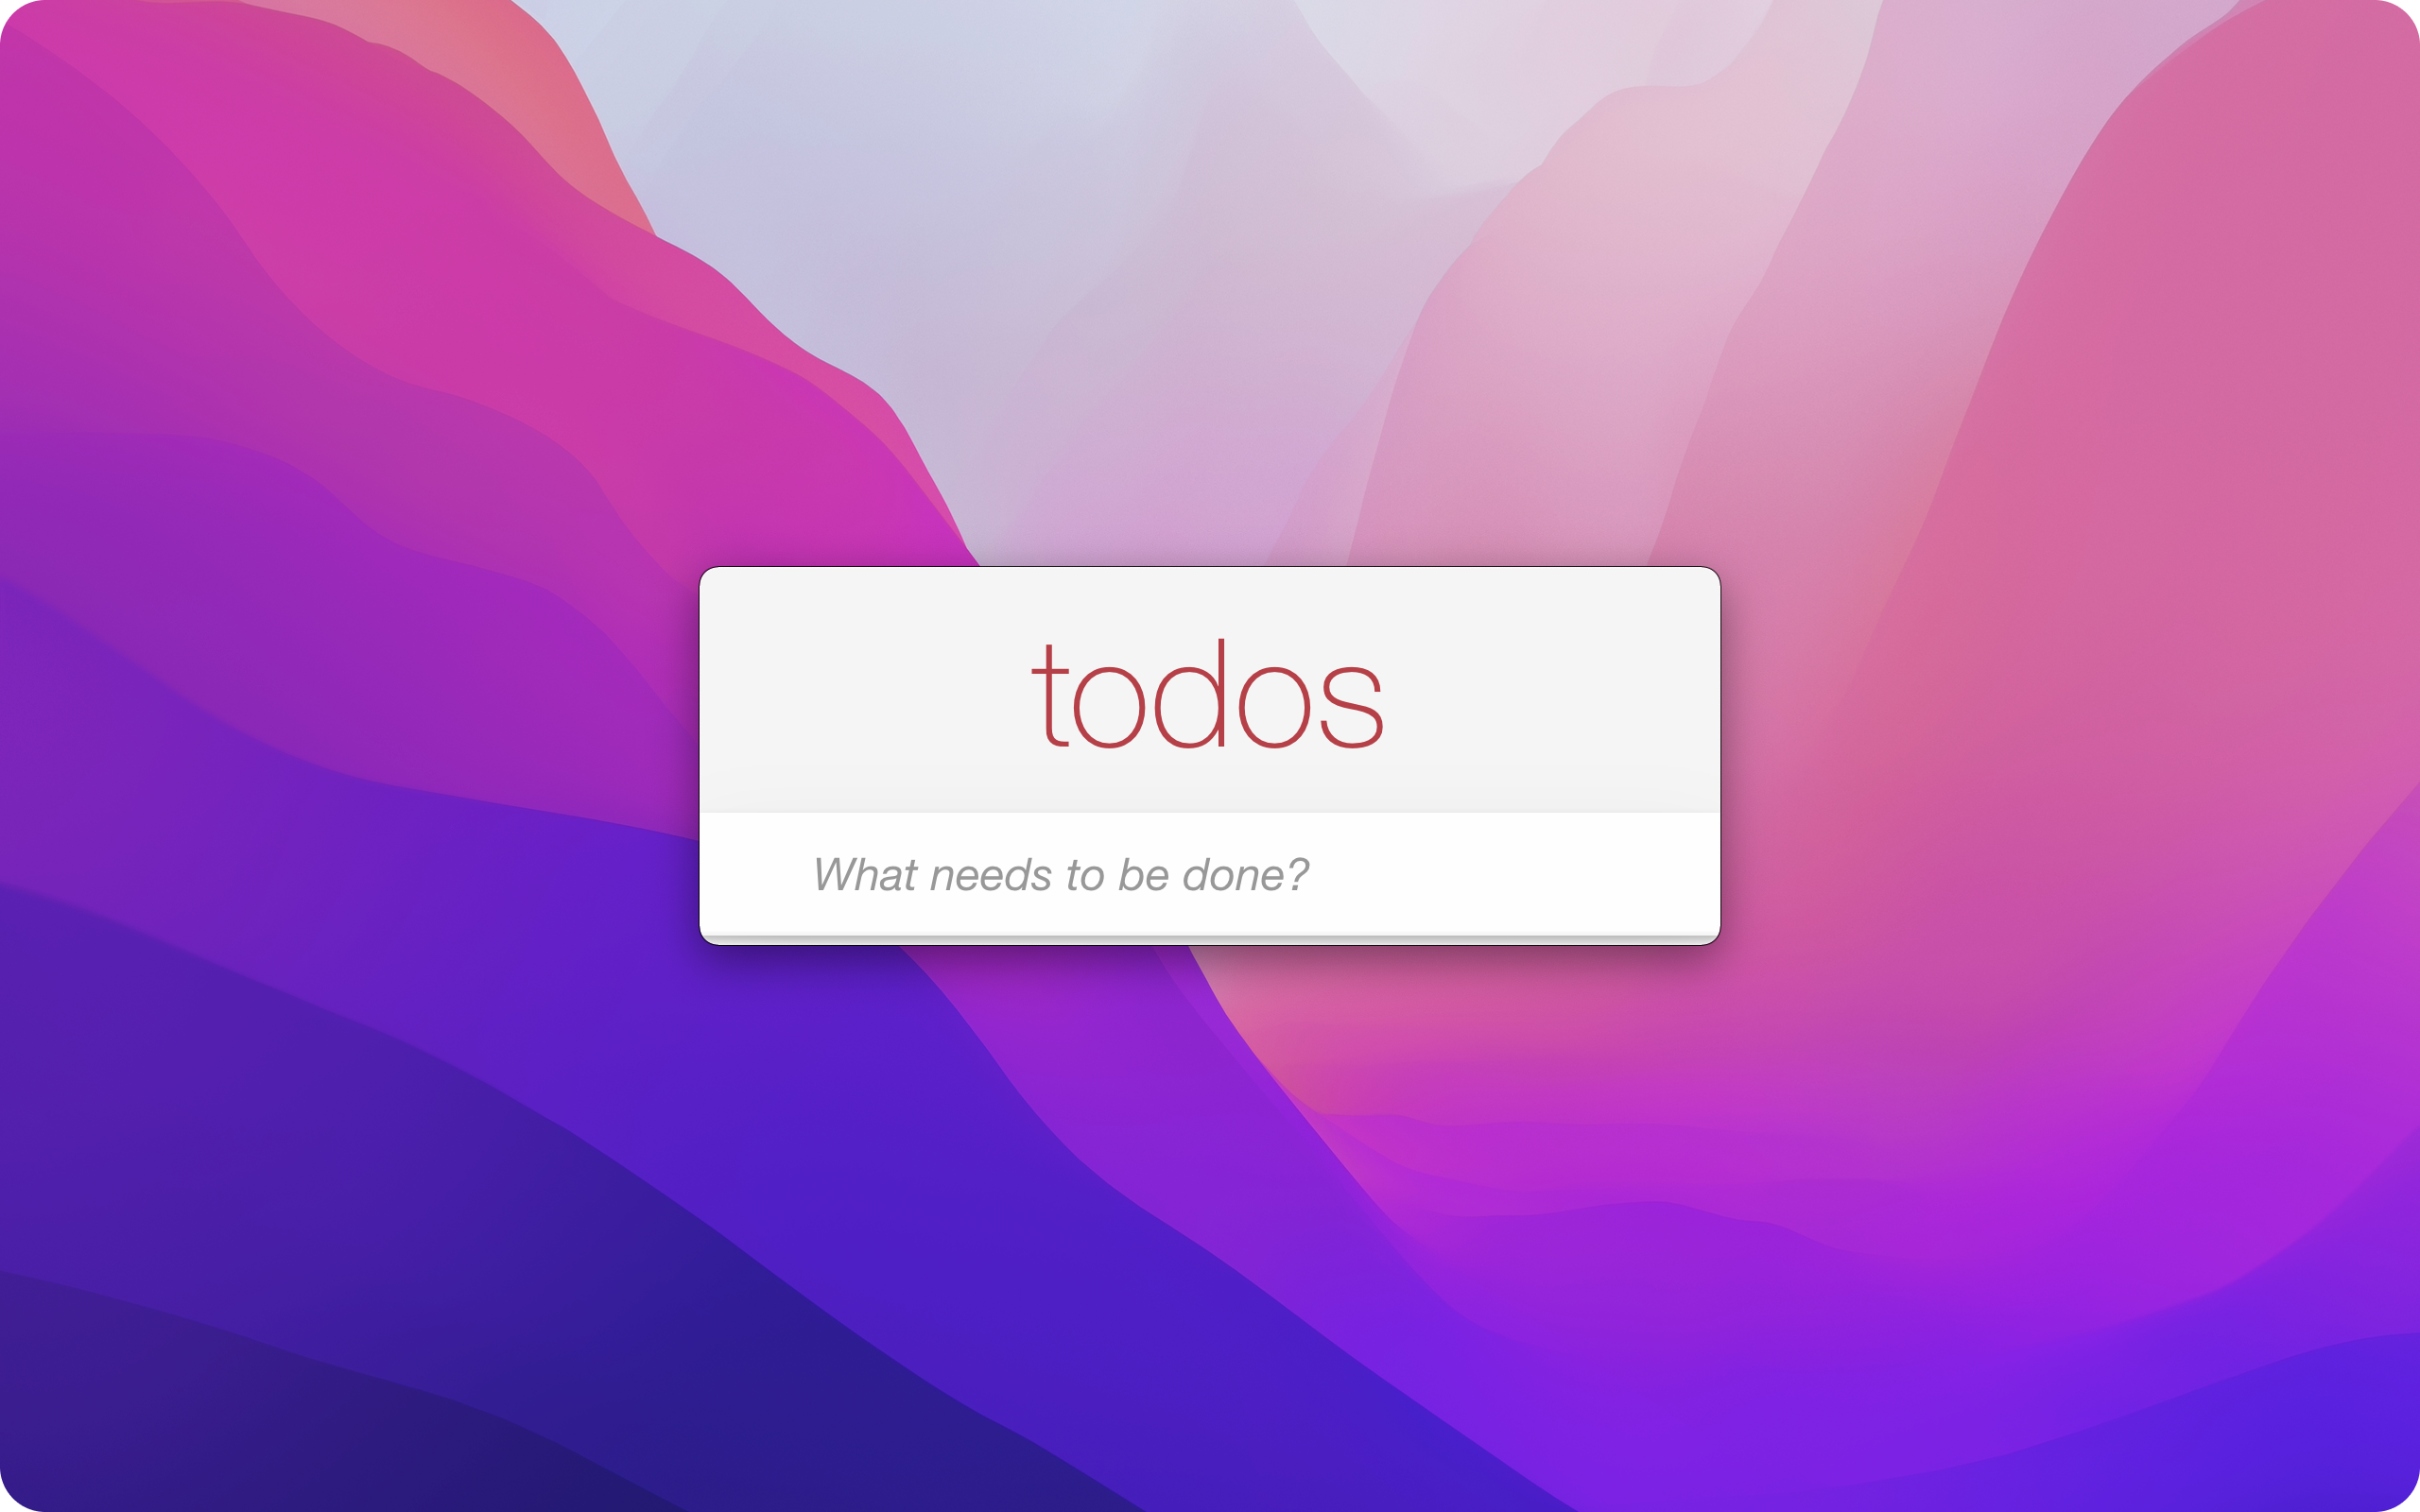 TodoMVC as a desktop app application